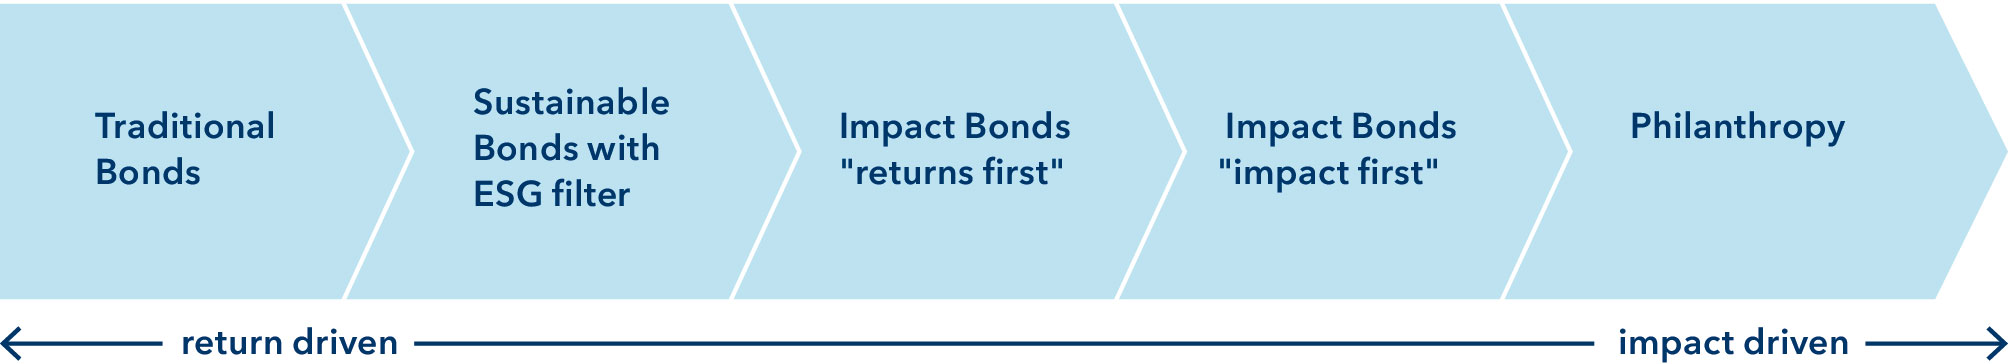 classification impact bonds